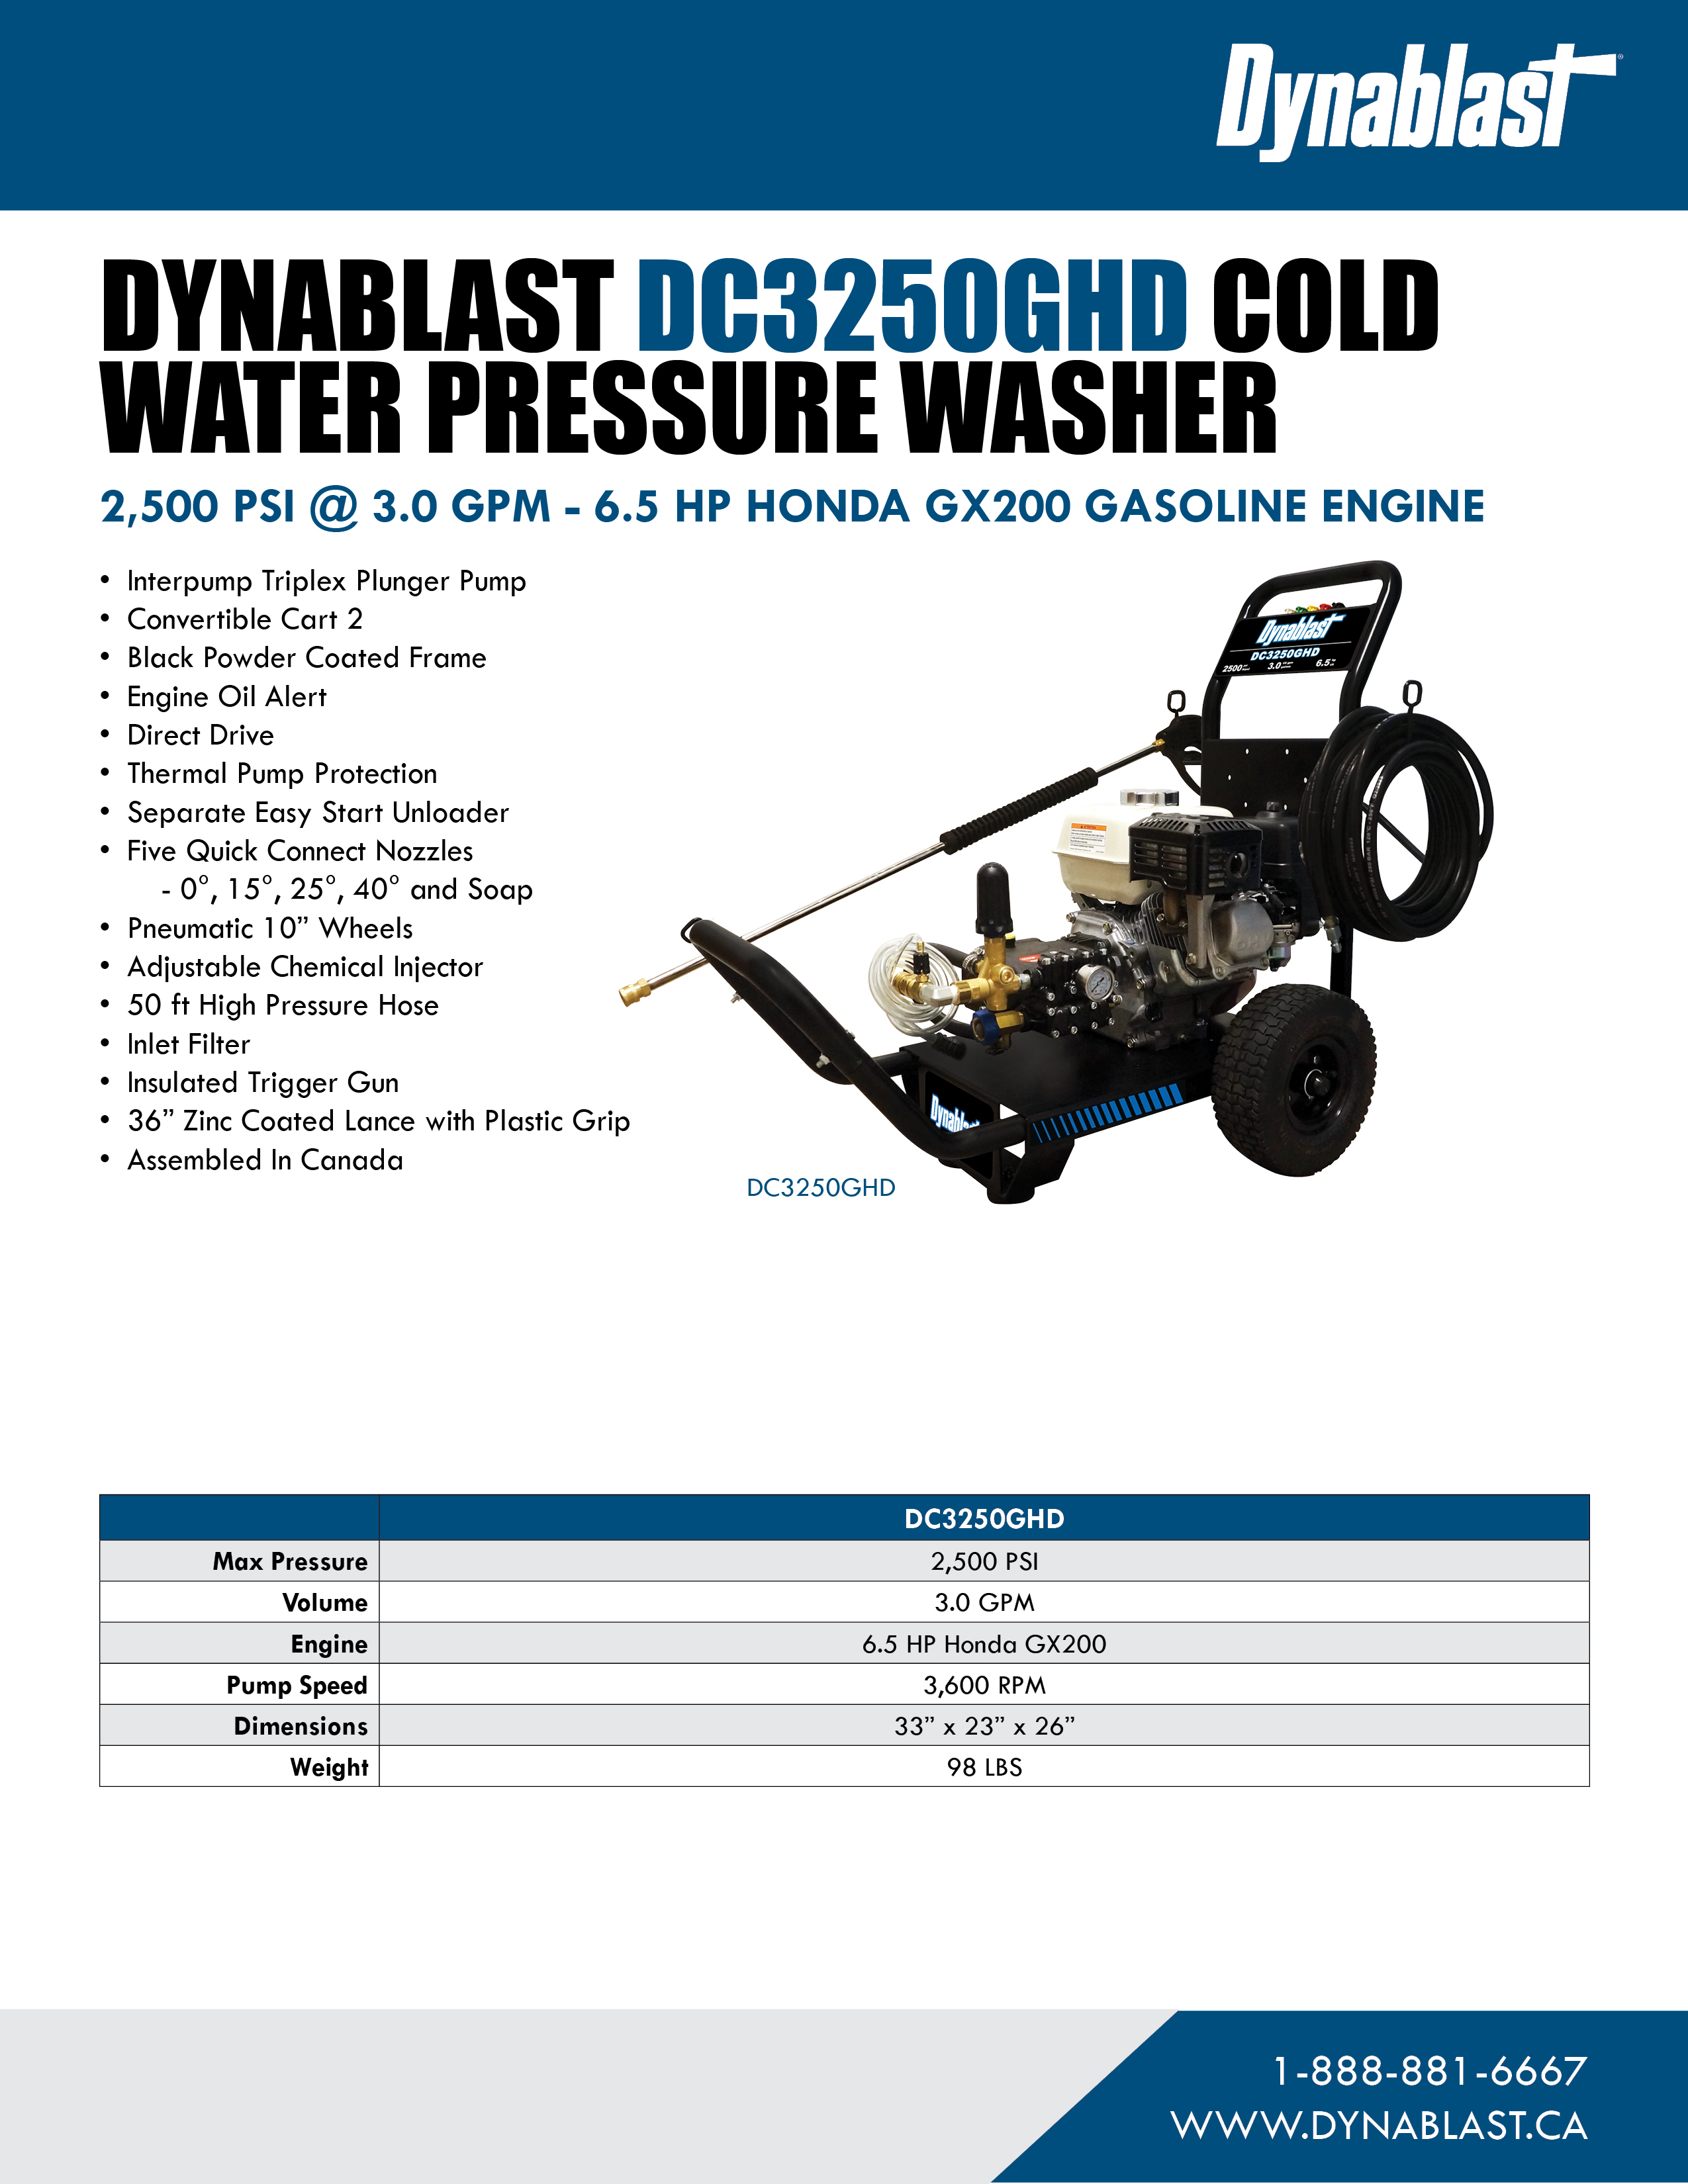 Spec Sheet - Dynablast DC3250GHD Cold Water Pressure Washer